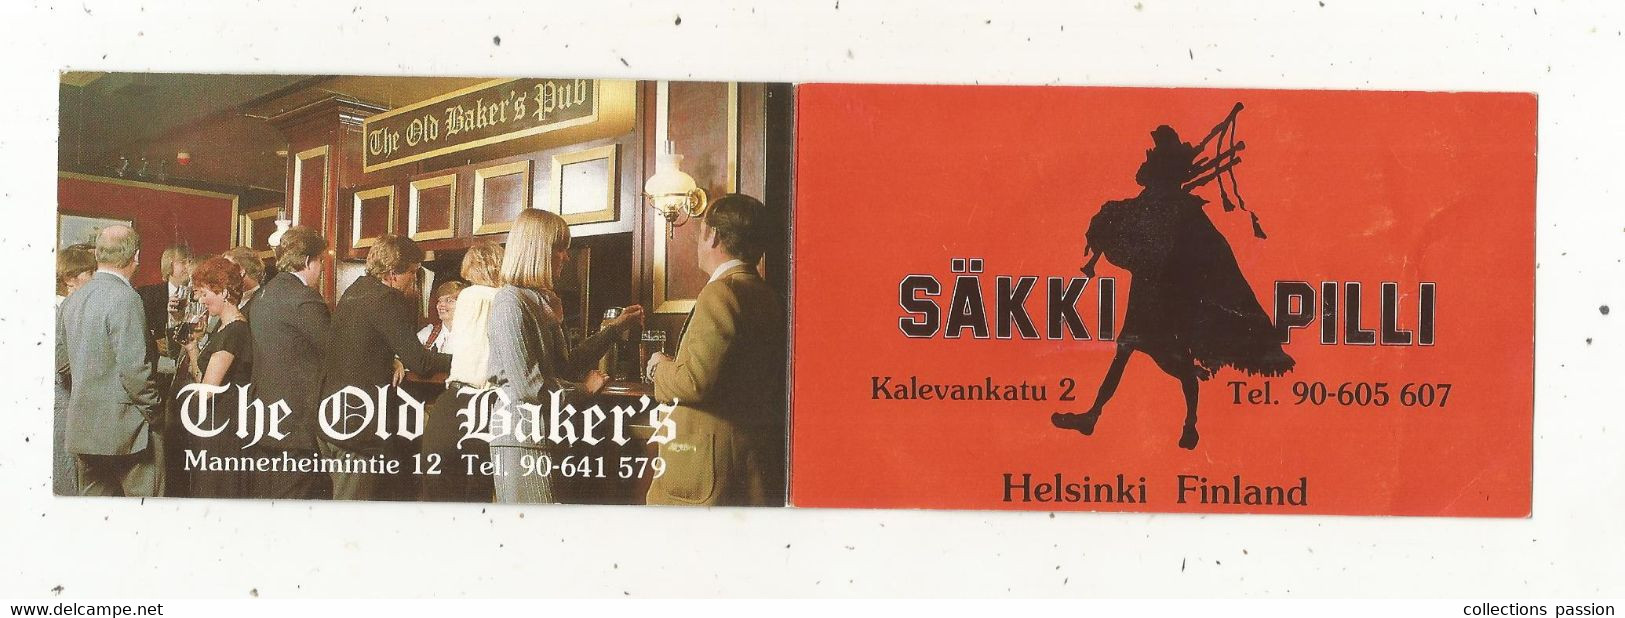 Carte De Visite, FINLAND,  FINLANDE,  HELSINKI,  SÄKKI PILLI , THE OLD BAKER'S, Pubs , Restaurants...2 Scans - Visitekaartjes